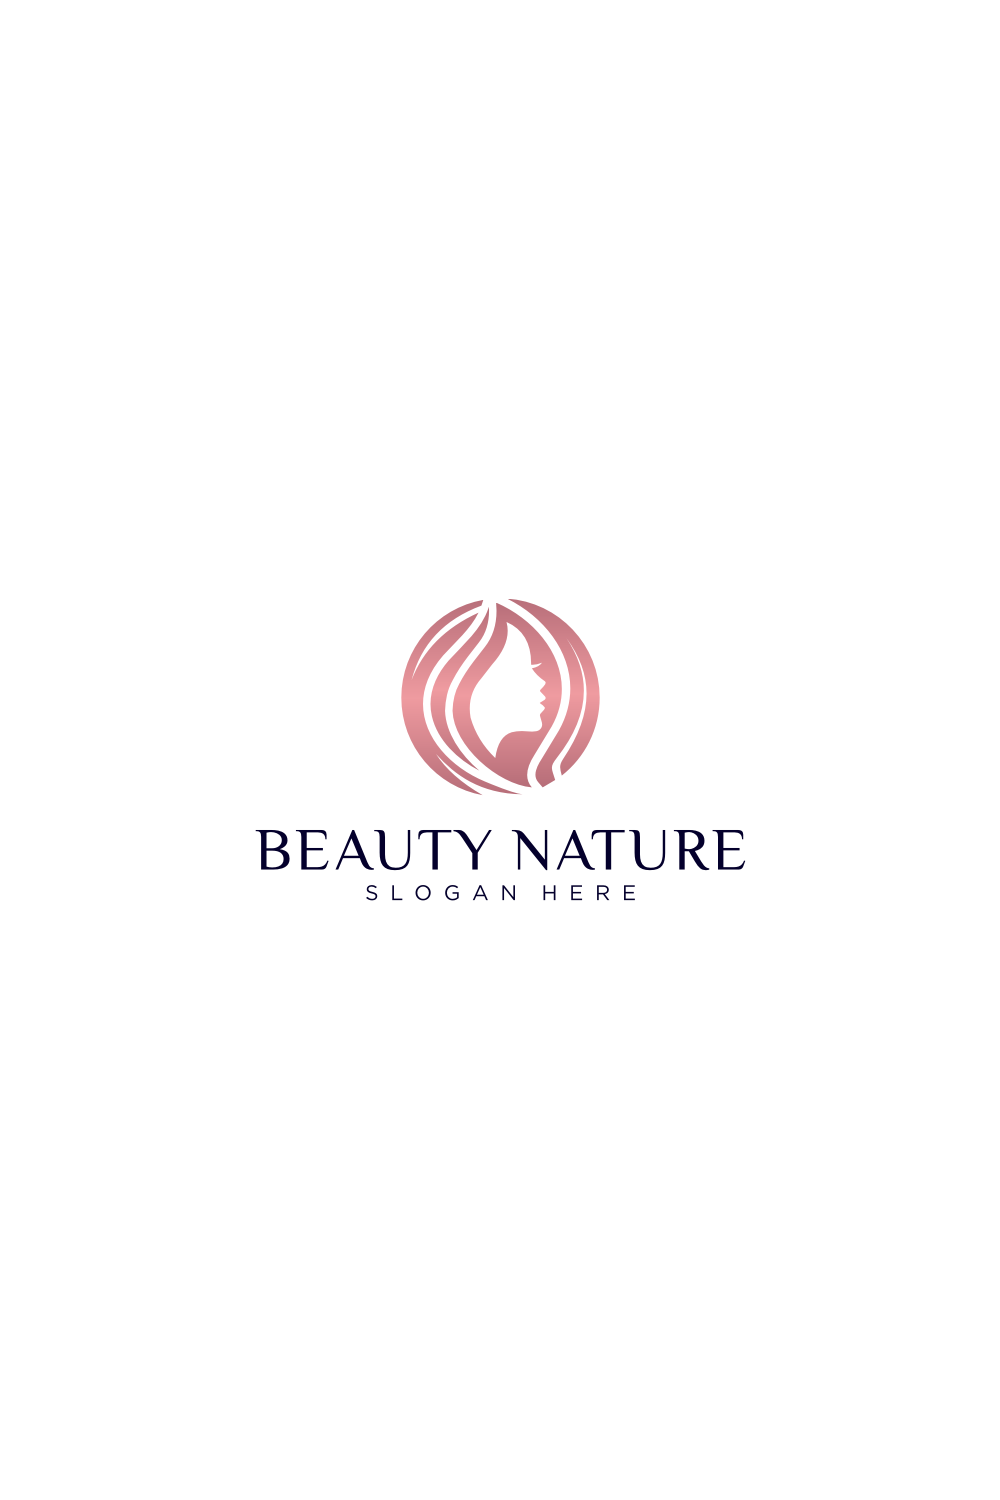 Women Face Beauty Logo Vector Design pinterest image.